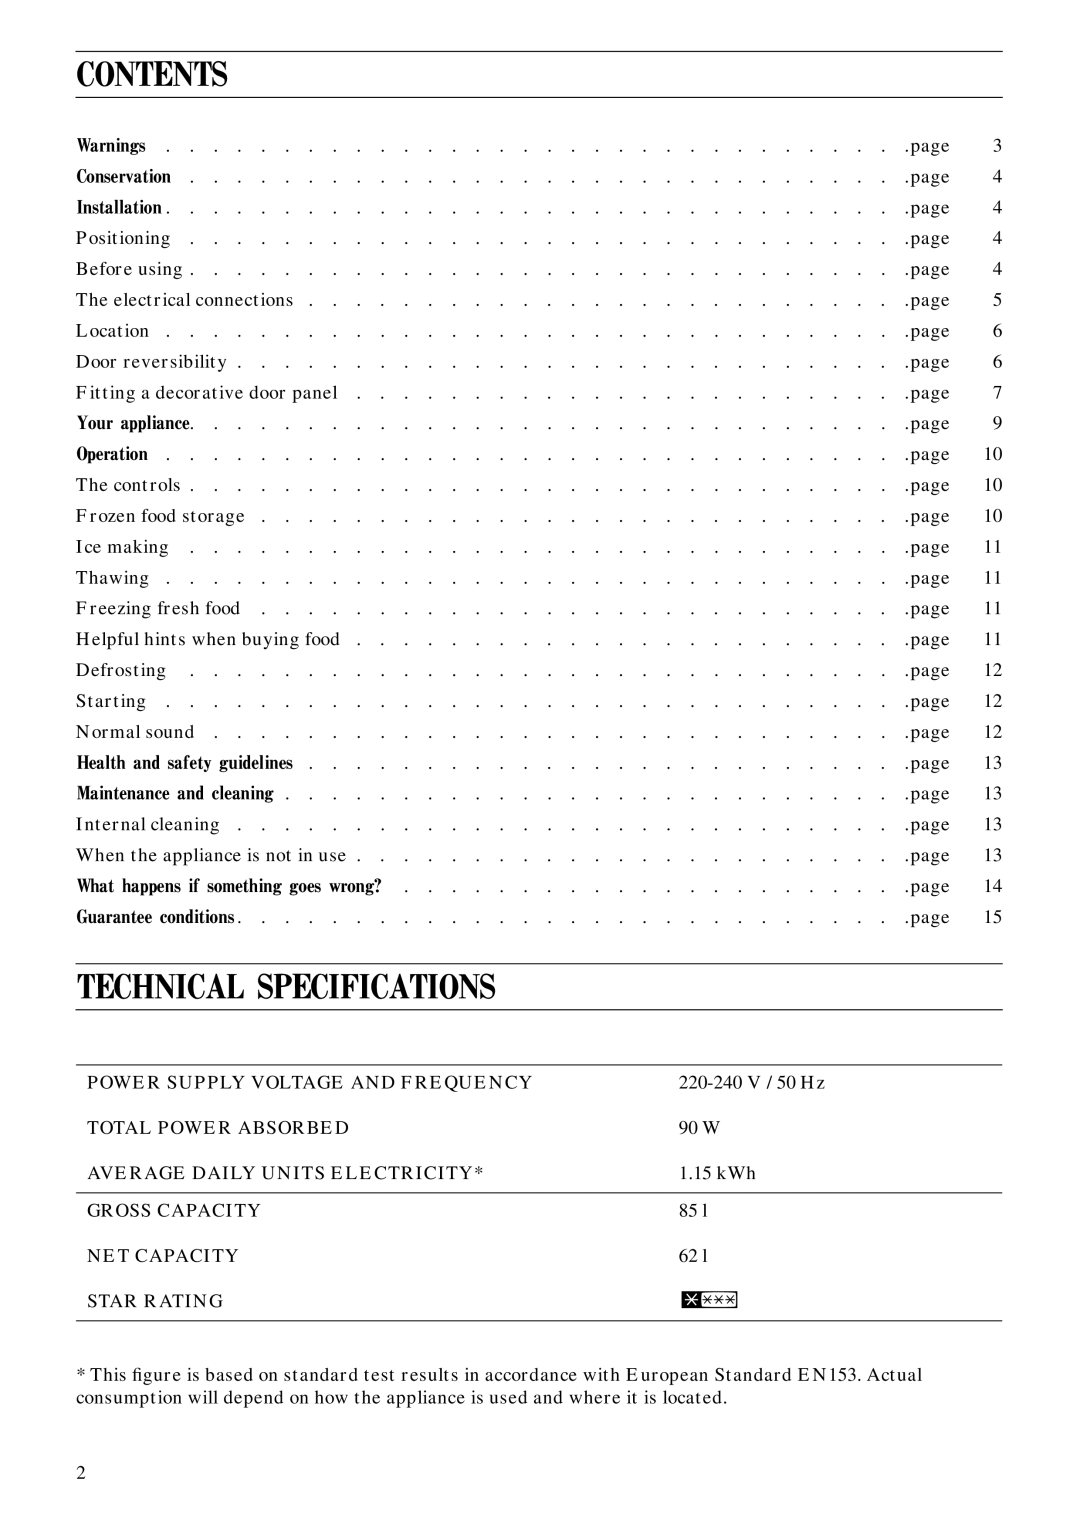 Zanussi ZEC 30 manual Contents, Technical Specifications 